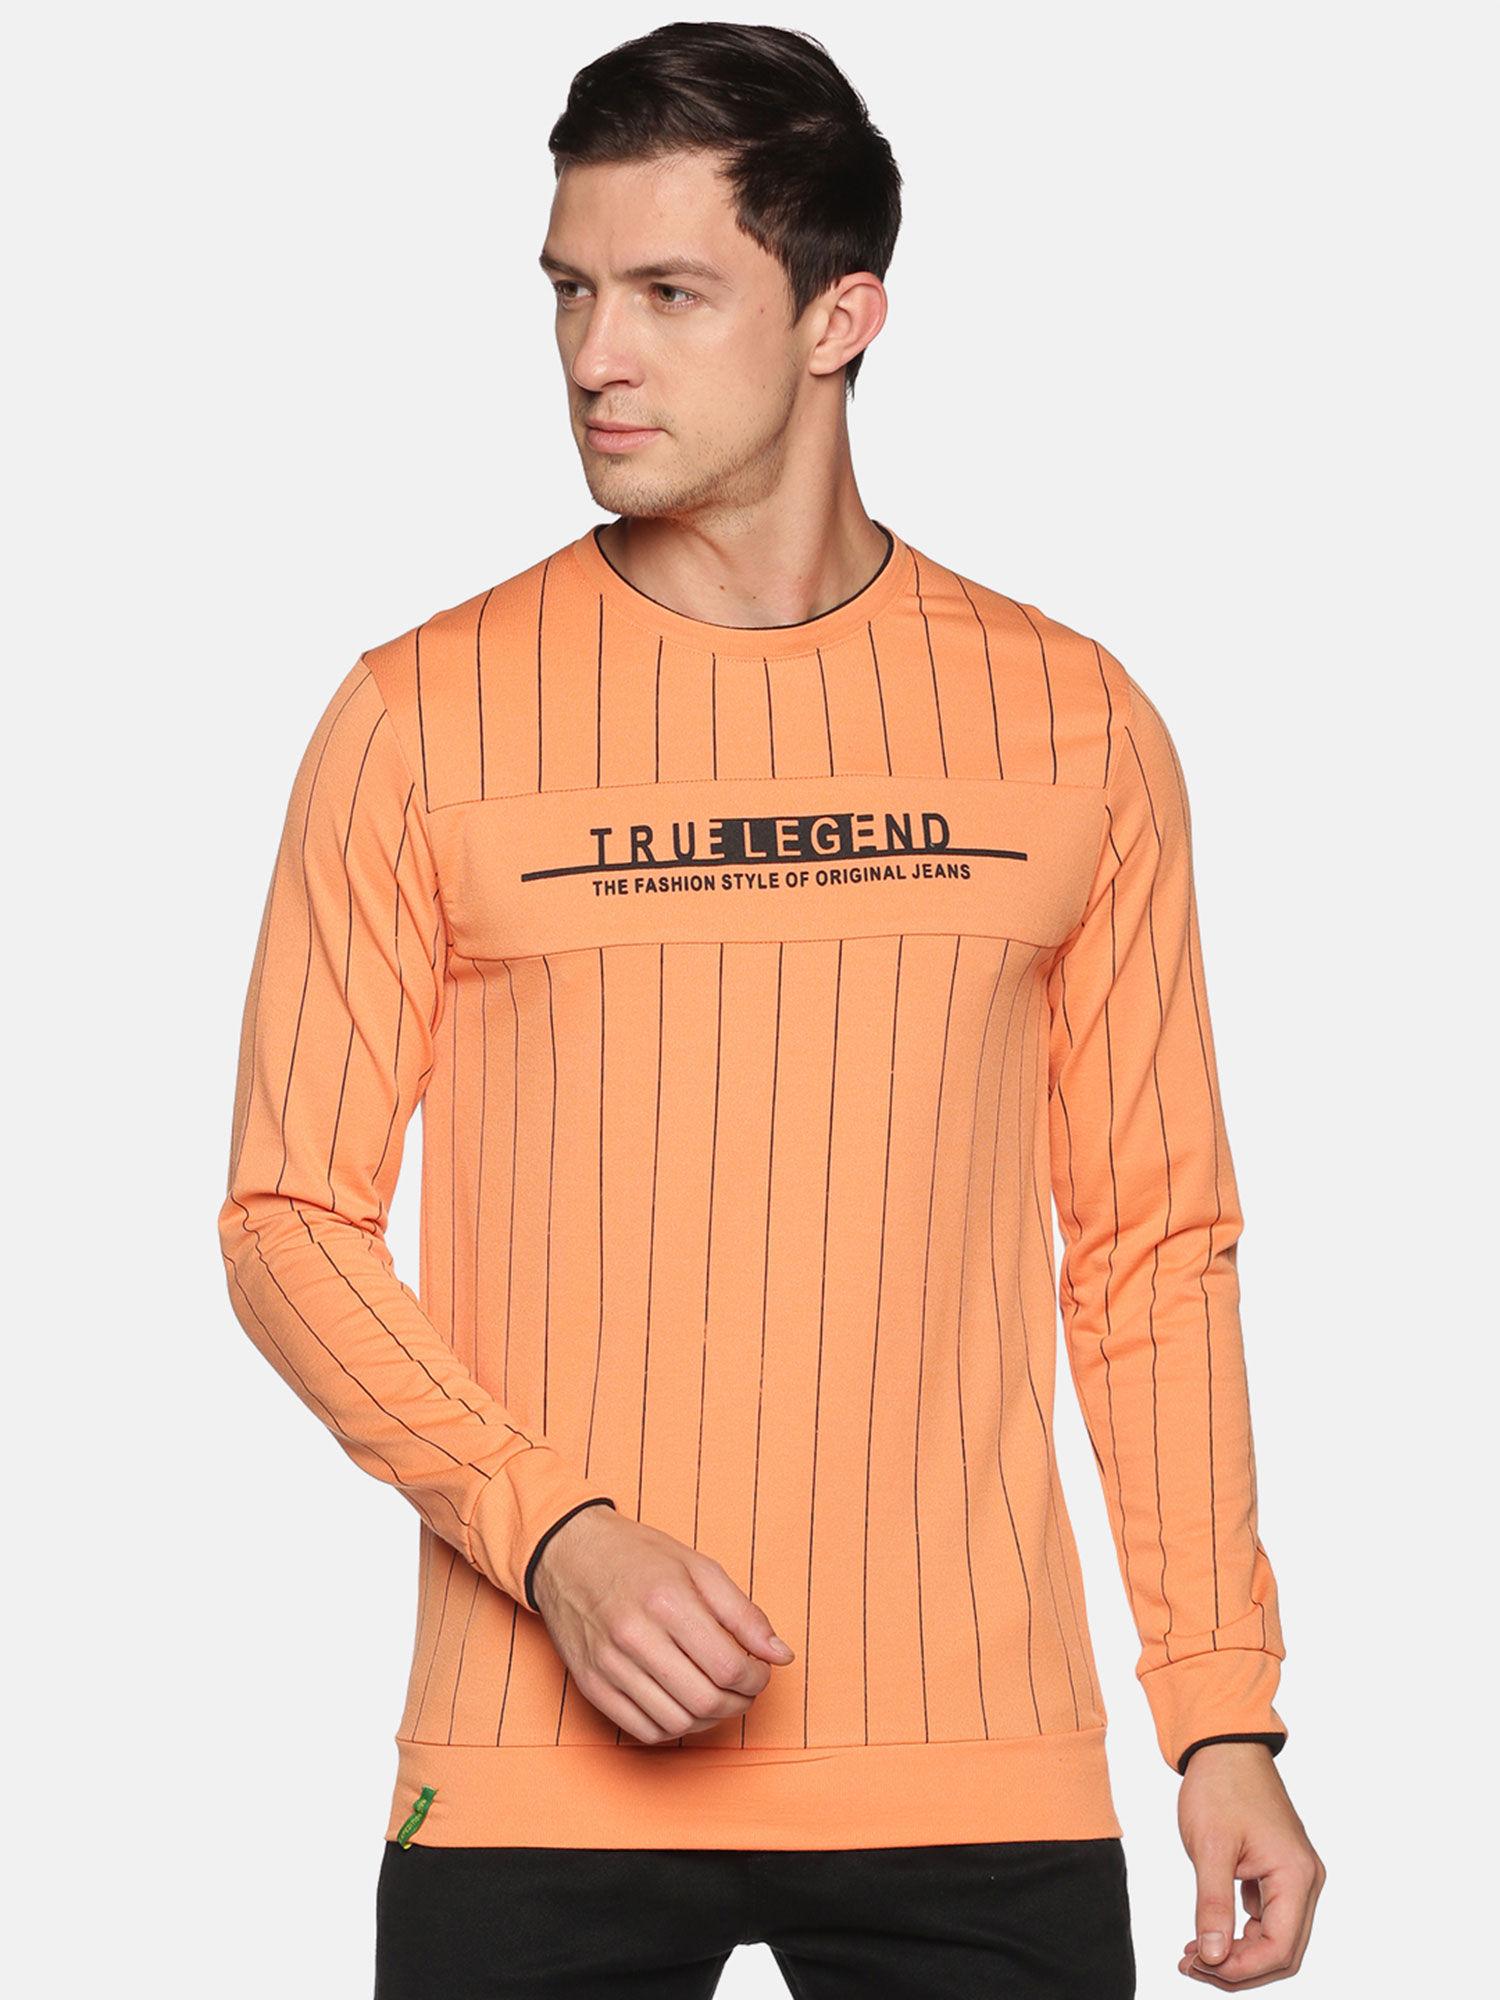 men's cotton casual orange sweatshirt